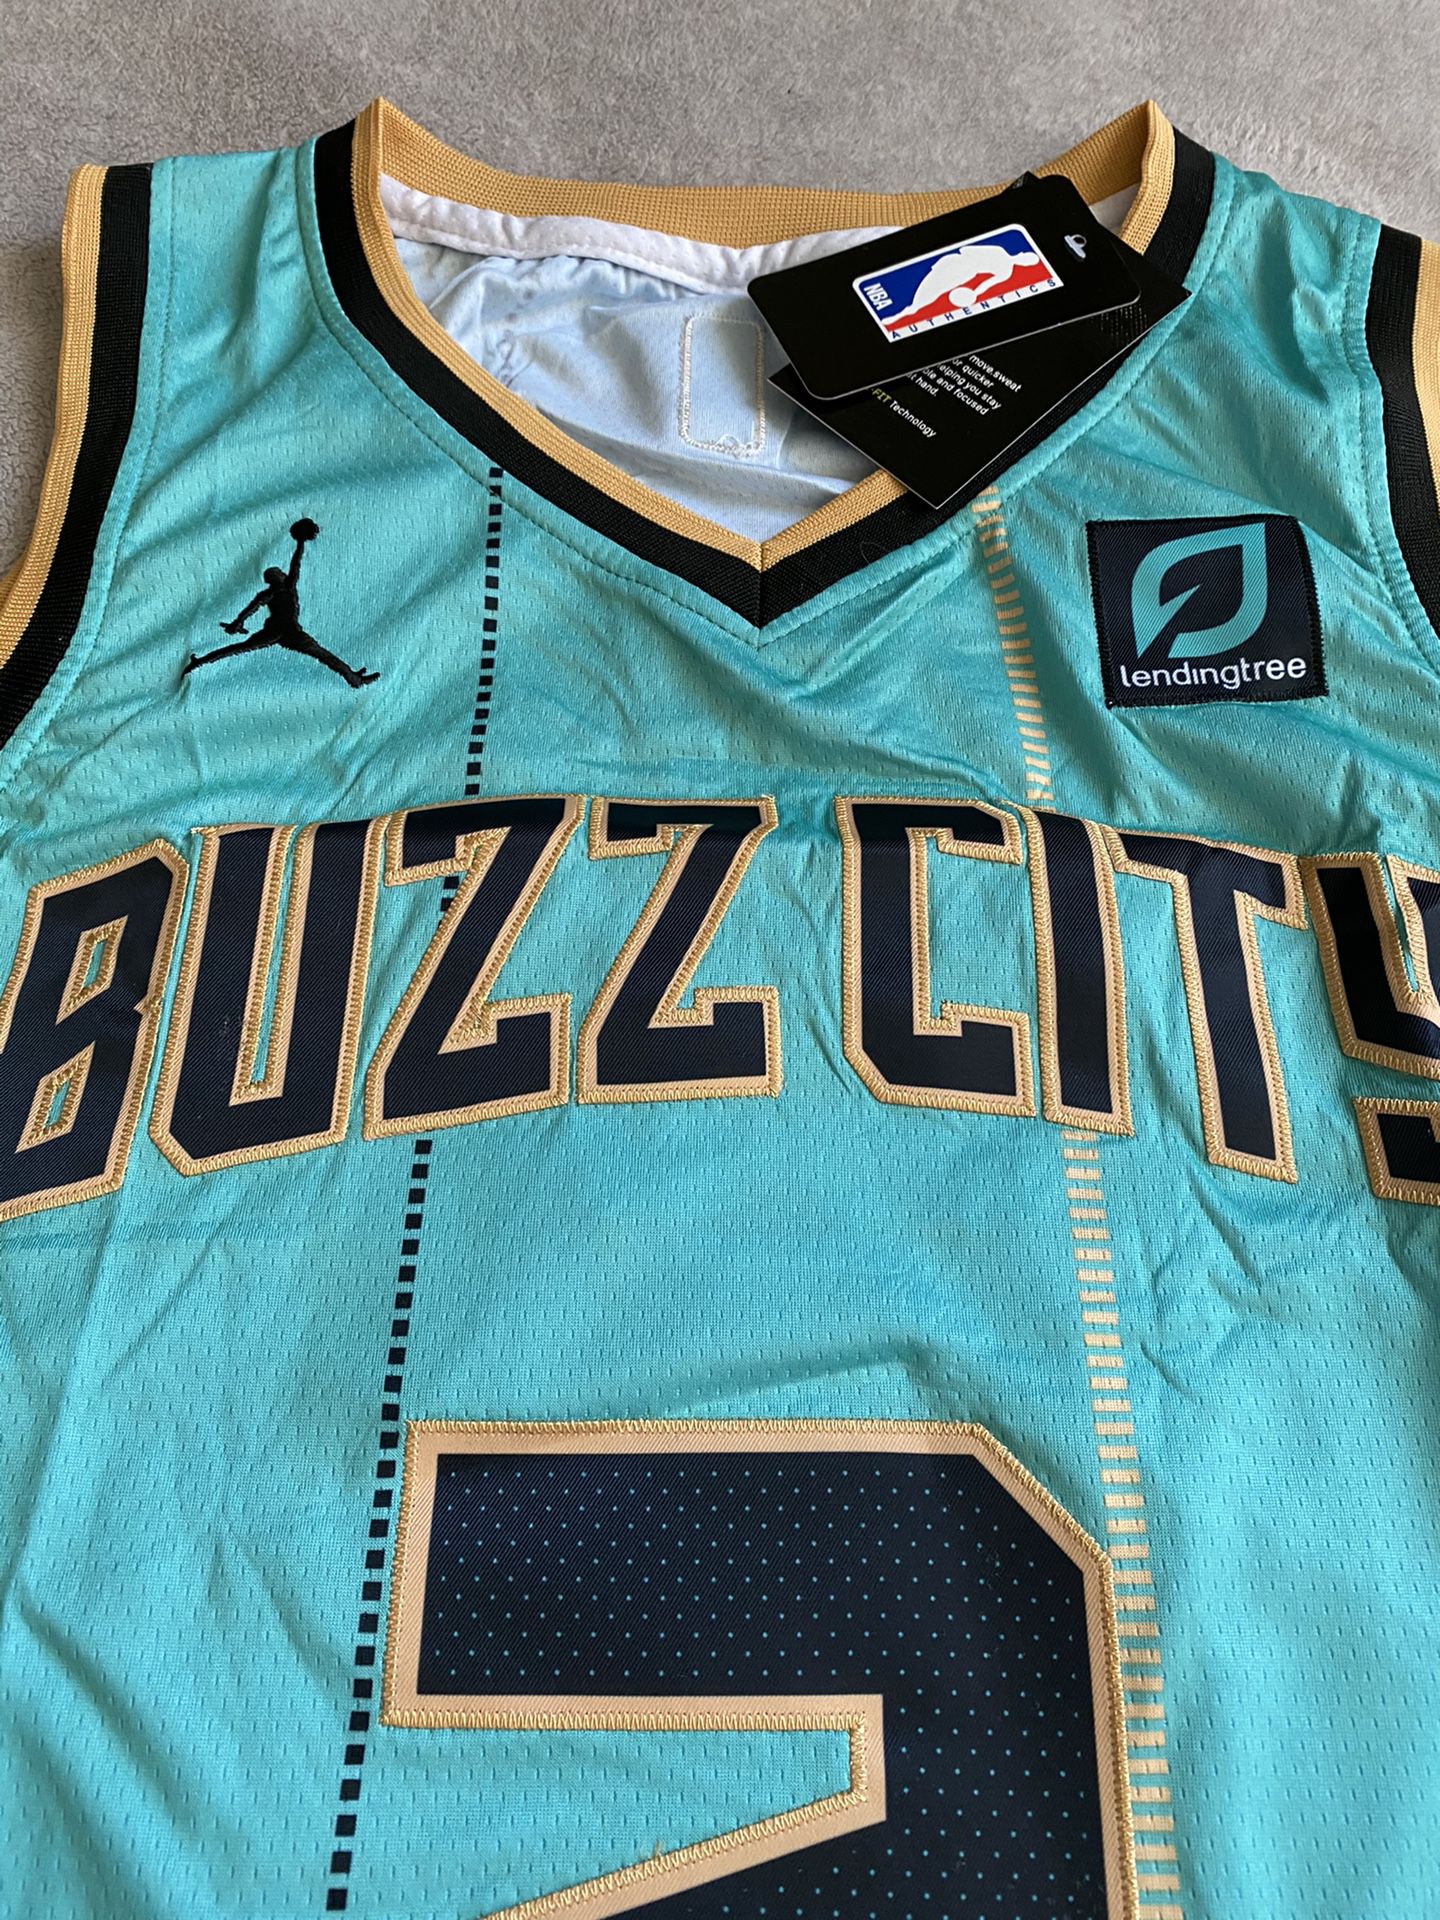 buzz city jersey lamelo